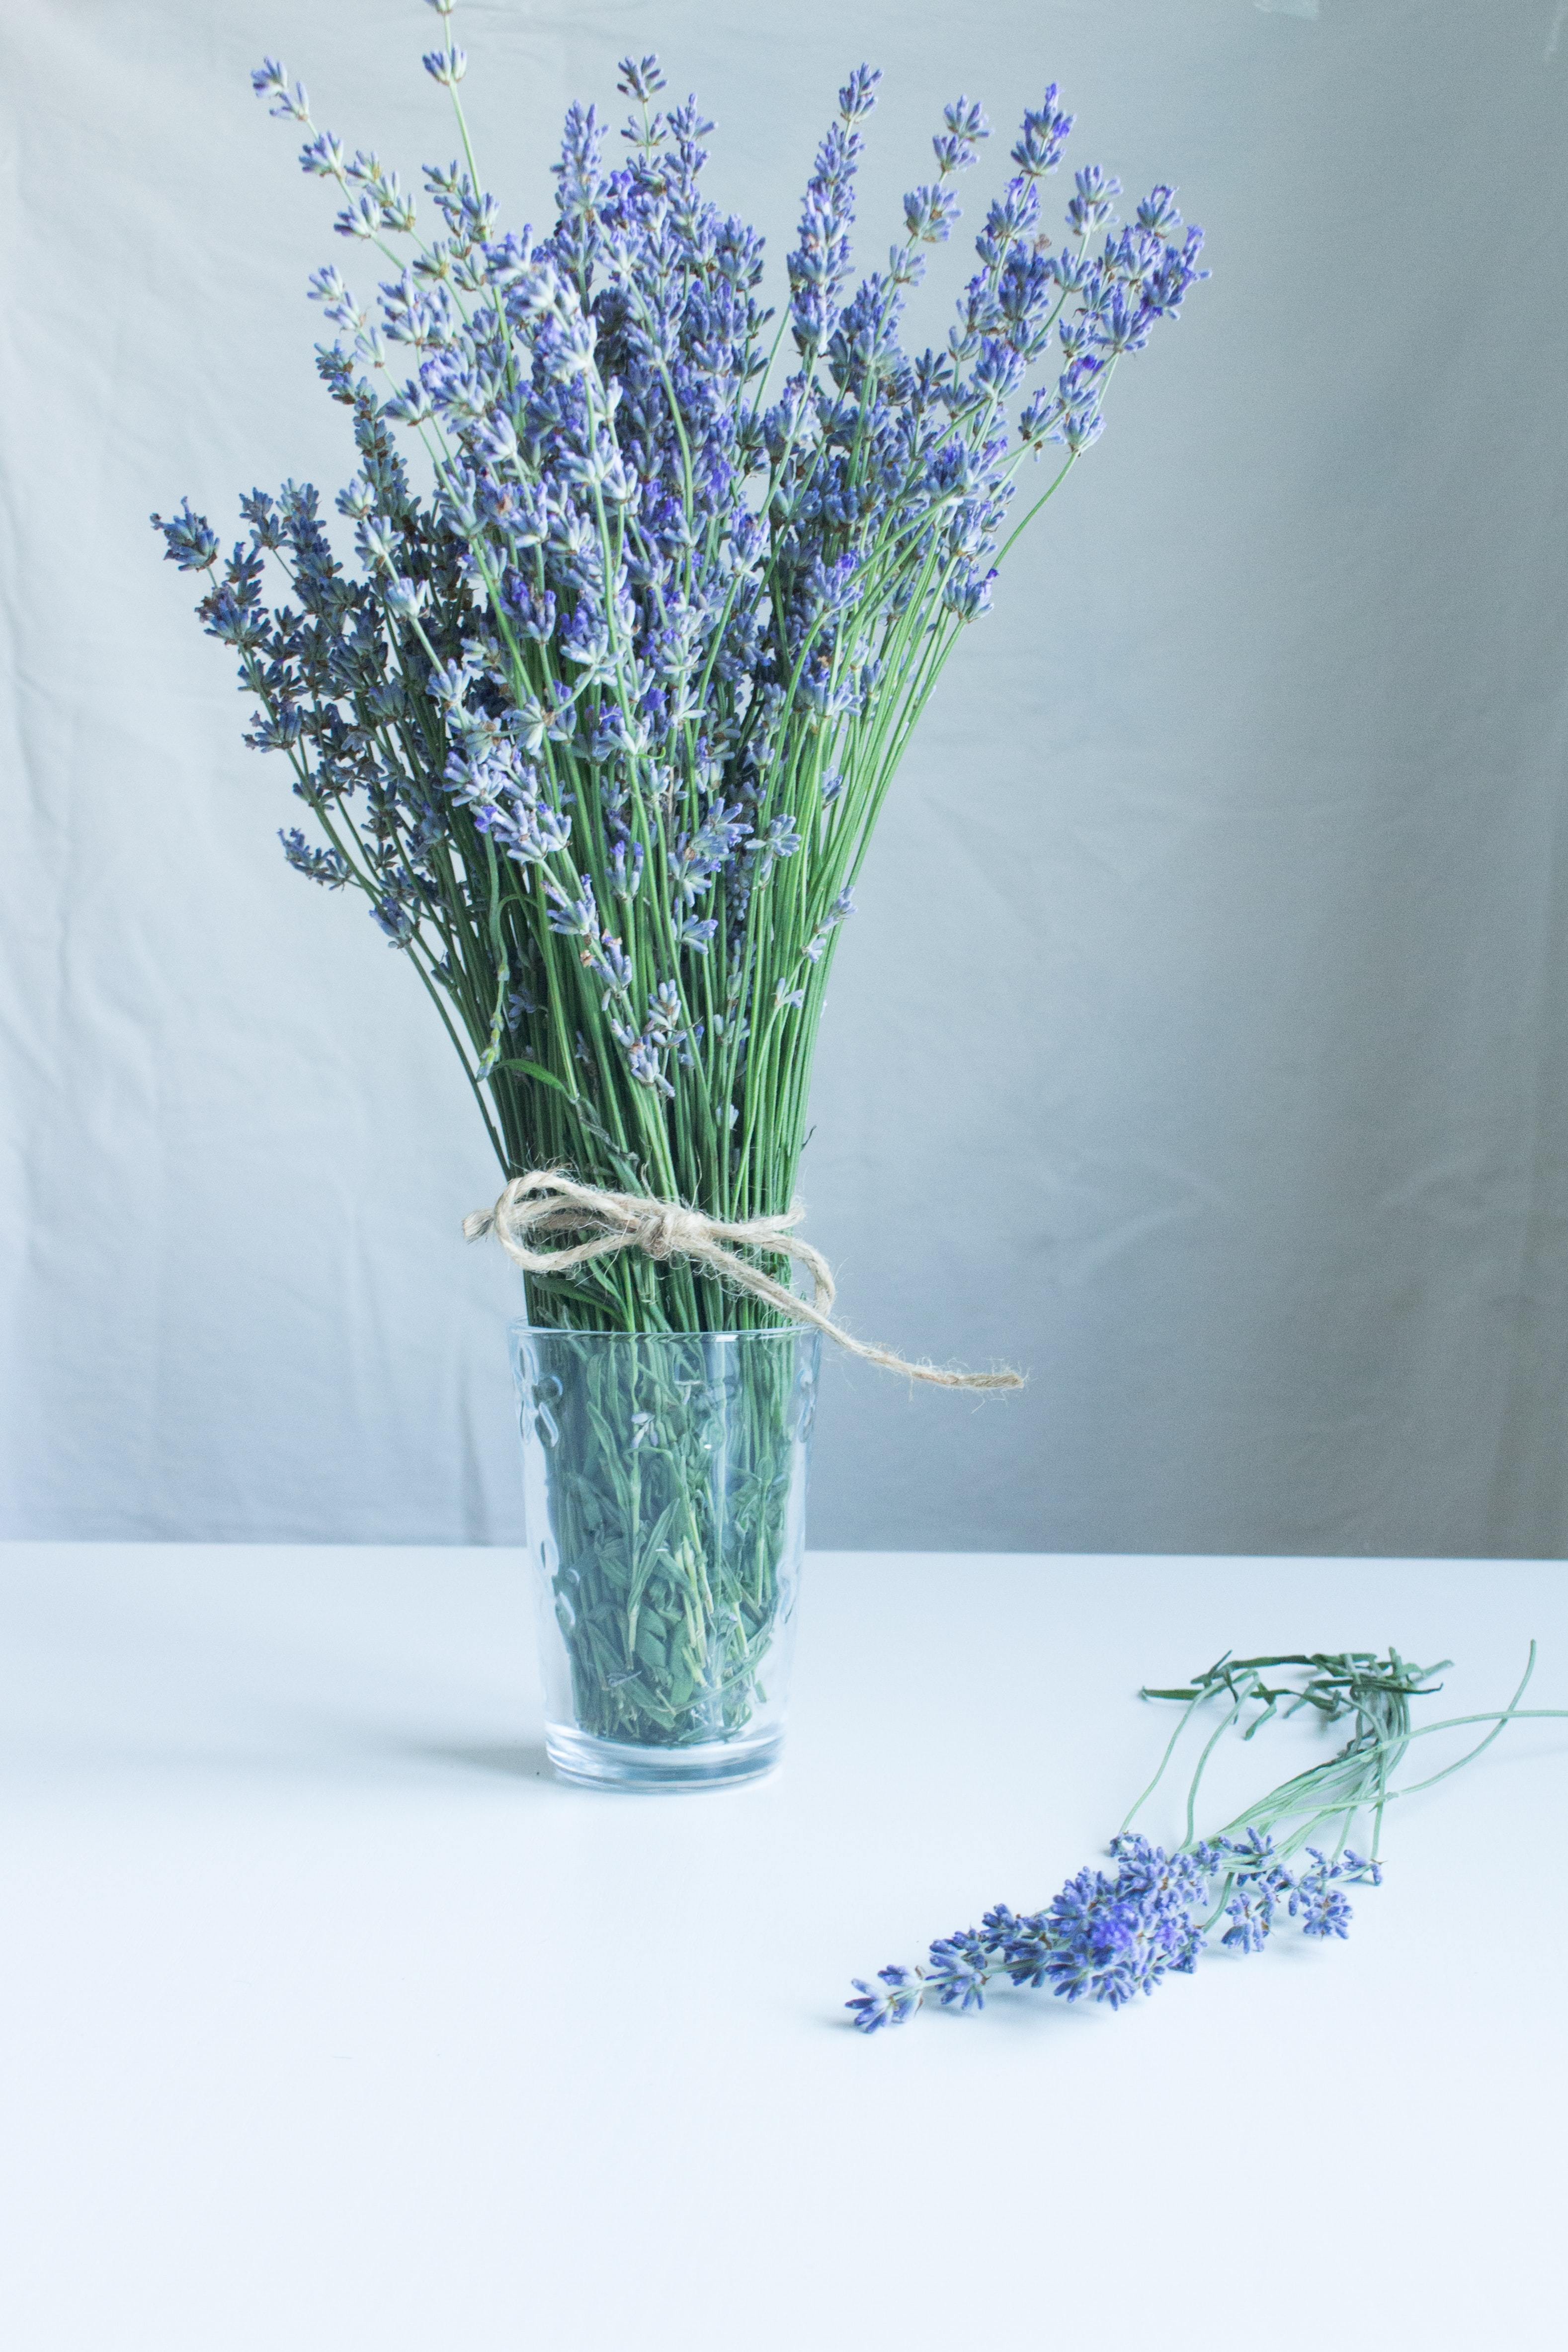 How to Grow + Enjoy Amazing Ontario Lavender